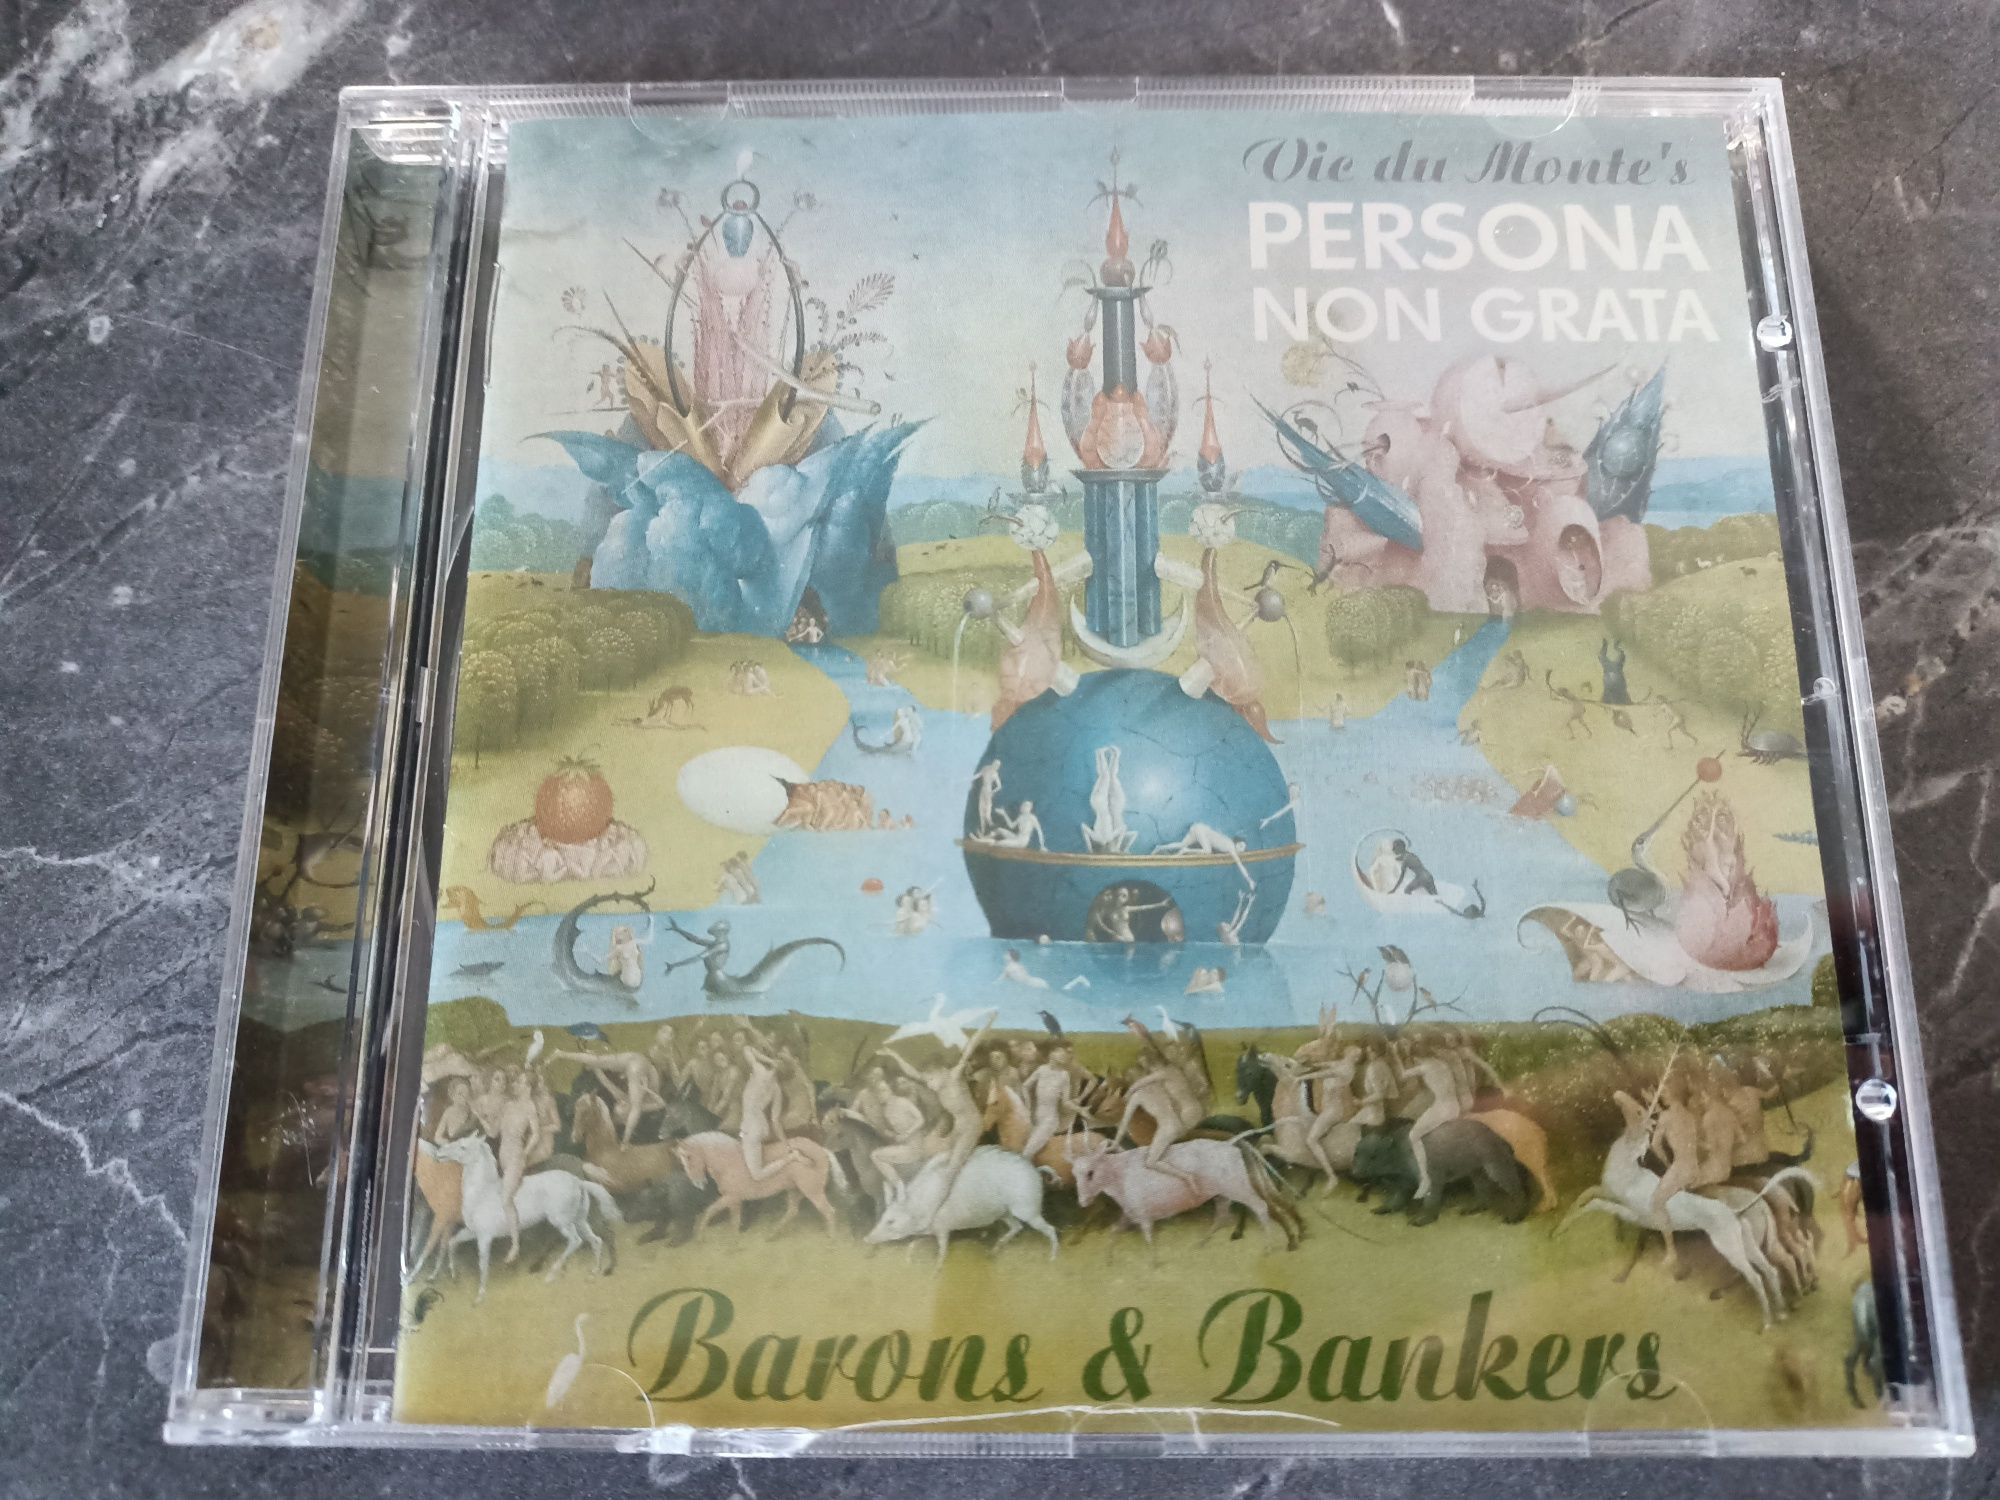 Vic Du Monte's Persona Non Grata - Barons & Bankers (CD, Album)(vg+)